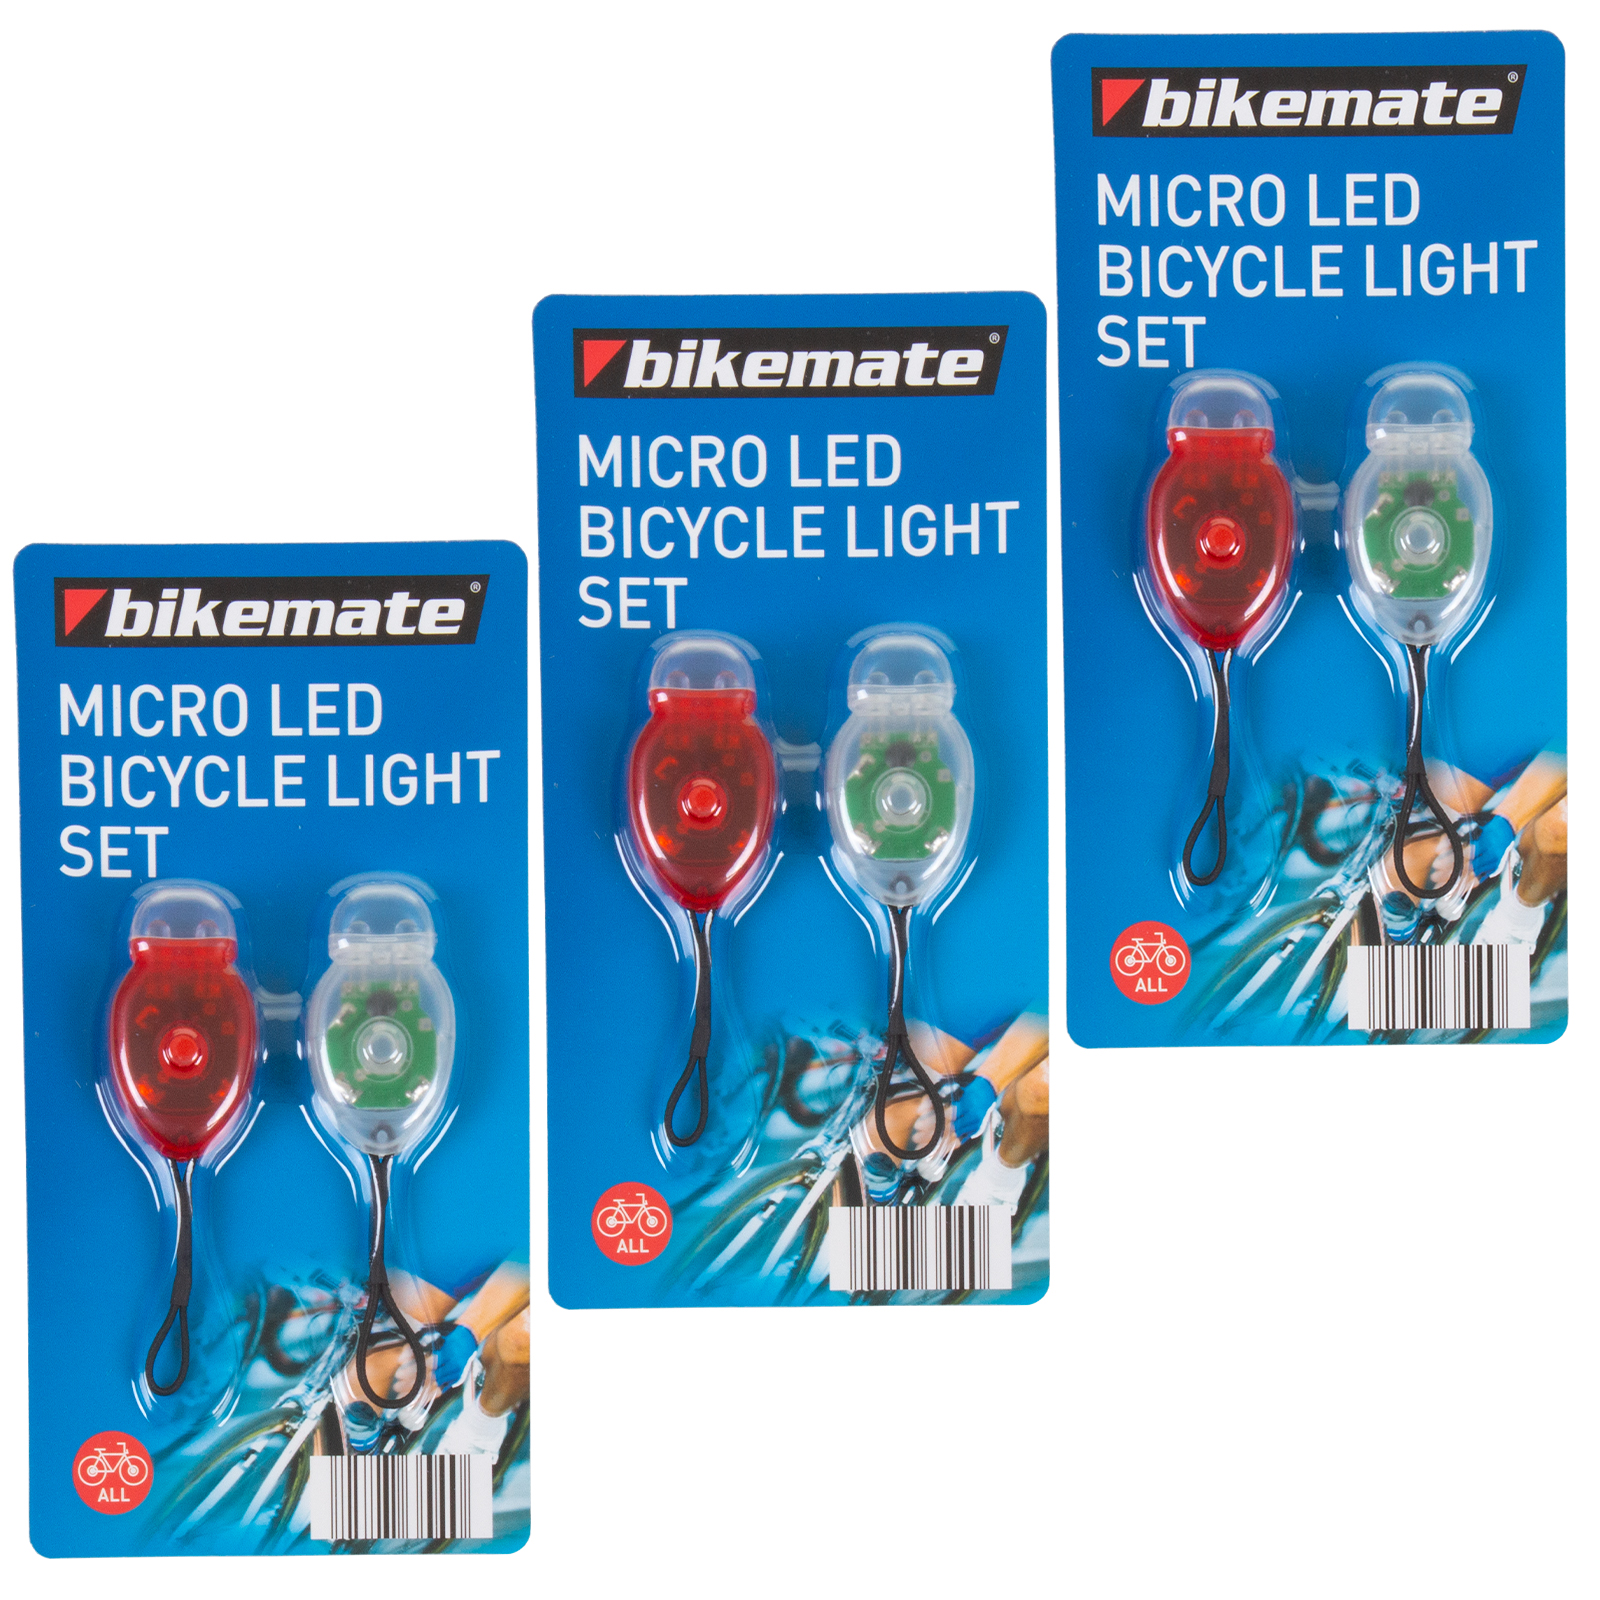 bikemate rear light